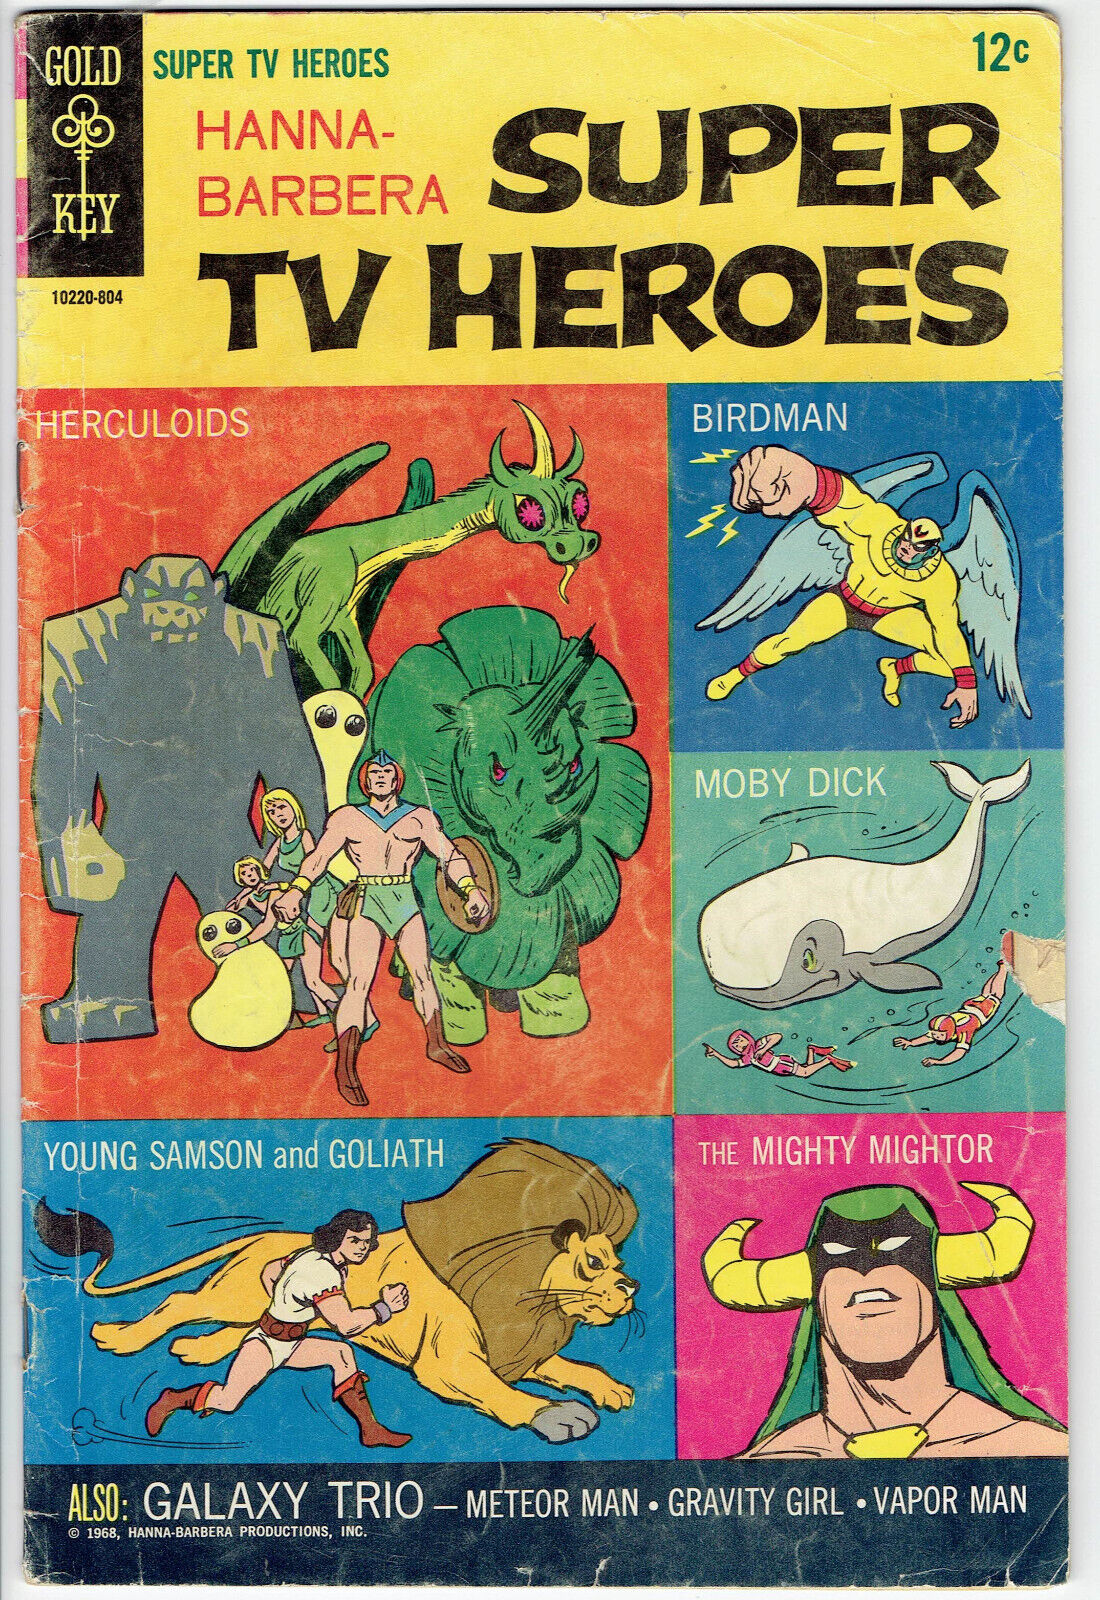 HANNA-BARBERA SUPER TV HEROES #1 Gold Key Comic Book 1968 Birdman VG 4.0